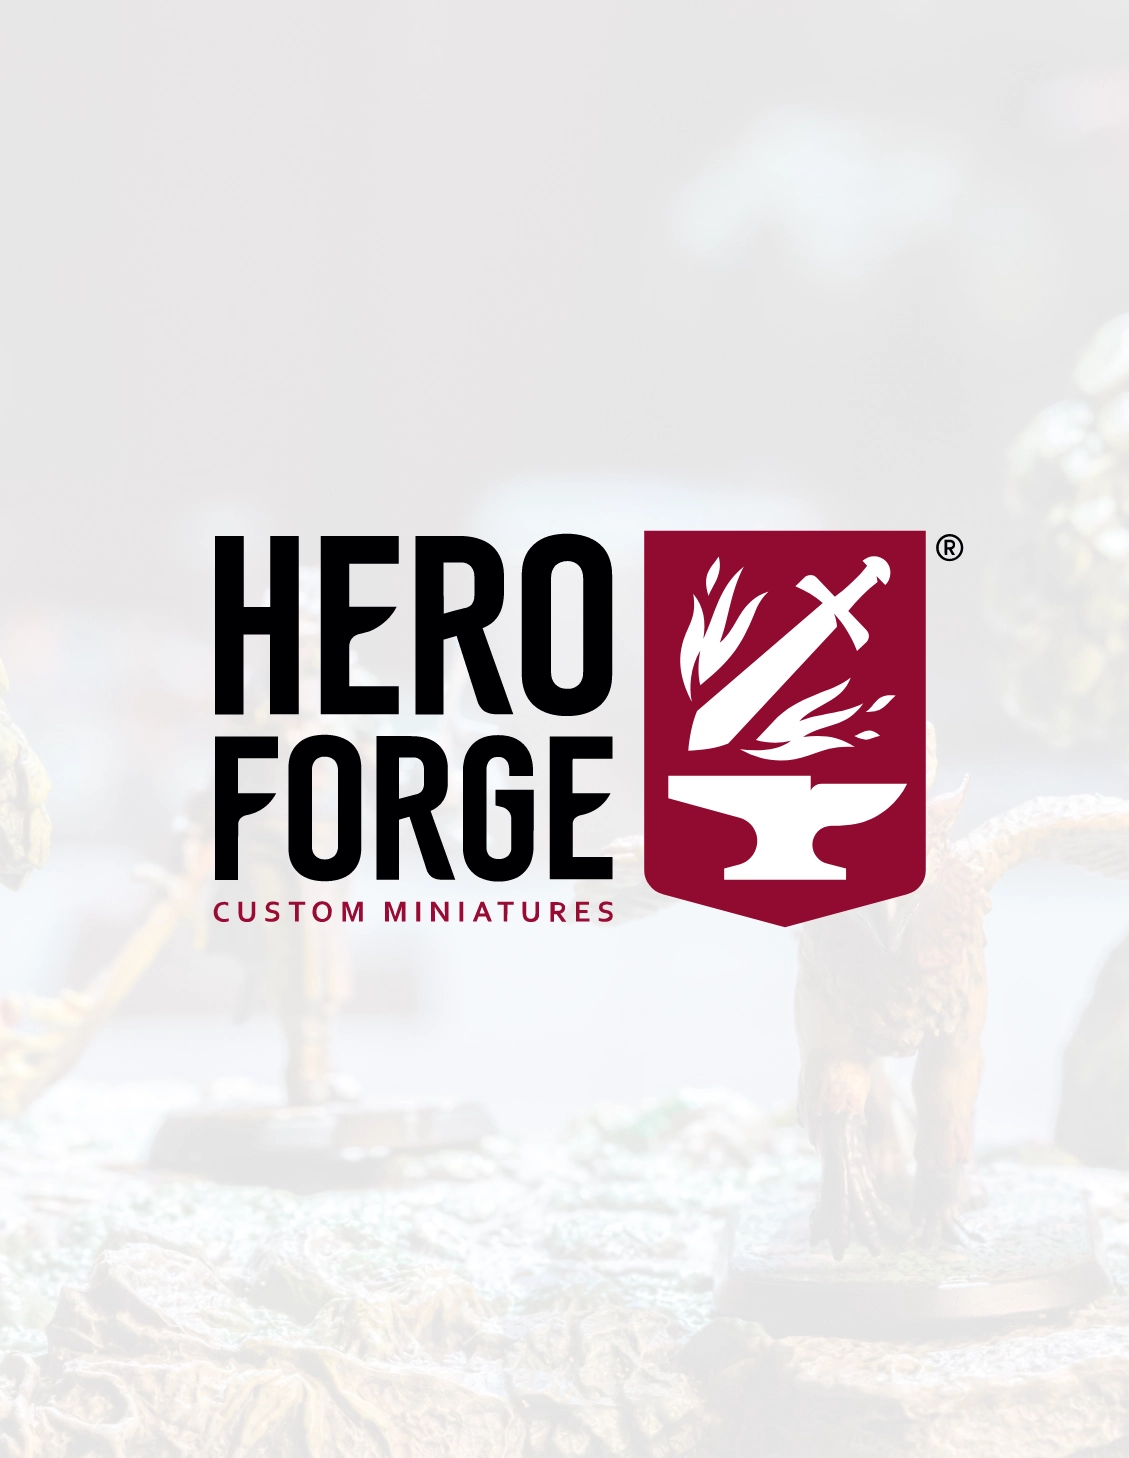 Hero forge thumbnail